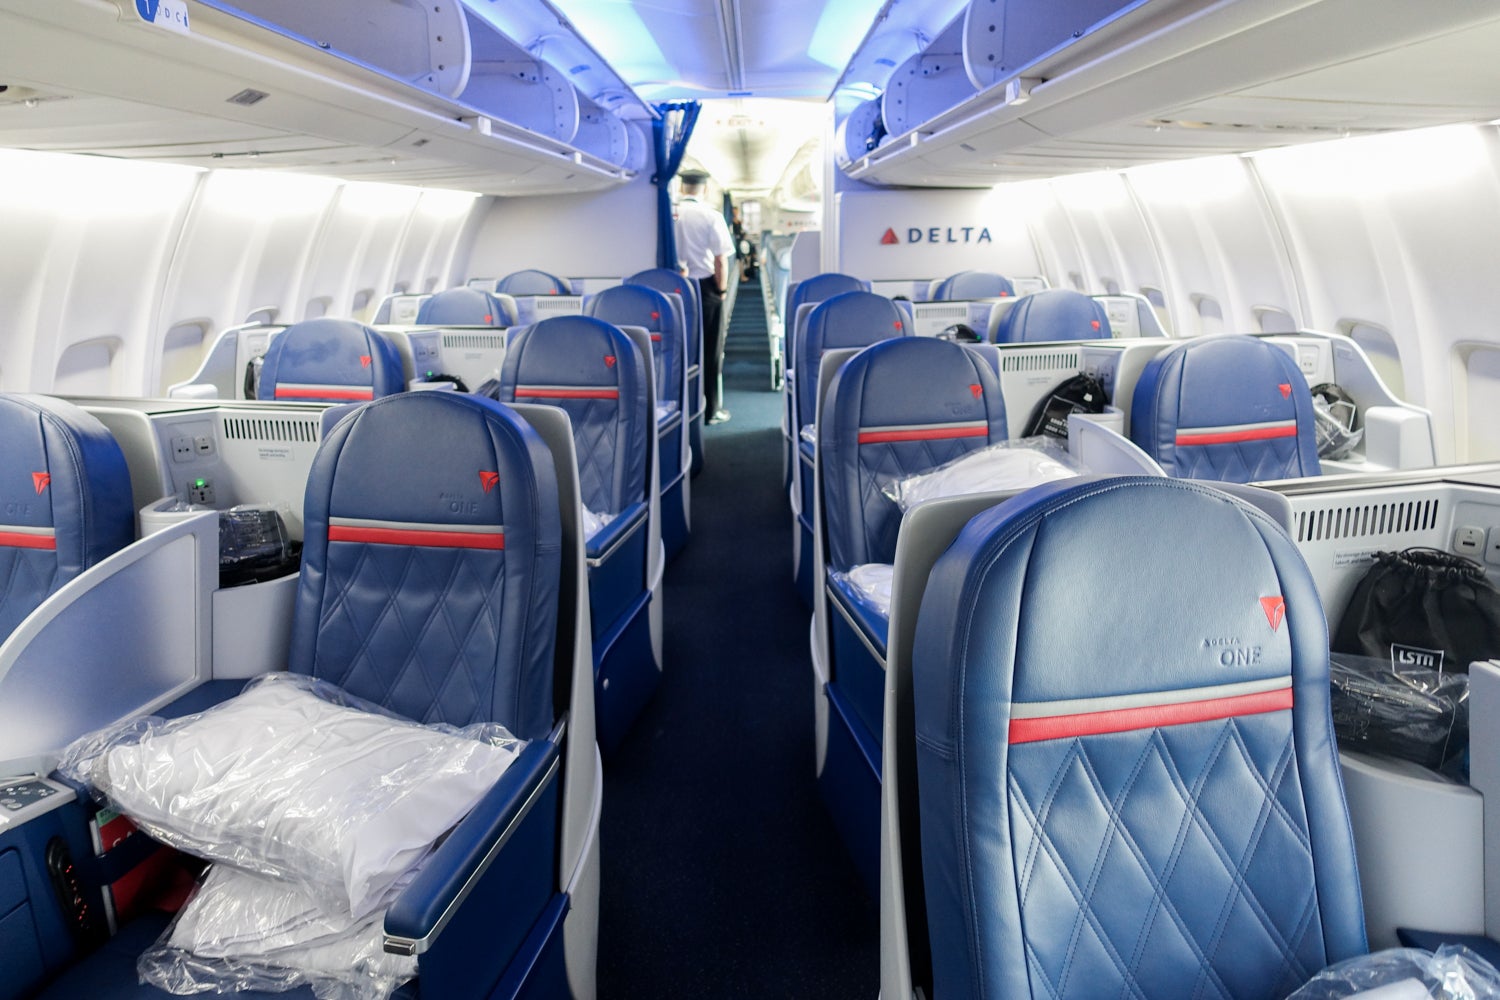 How every passenger on this Delta flight scored a firstclass upgrade